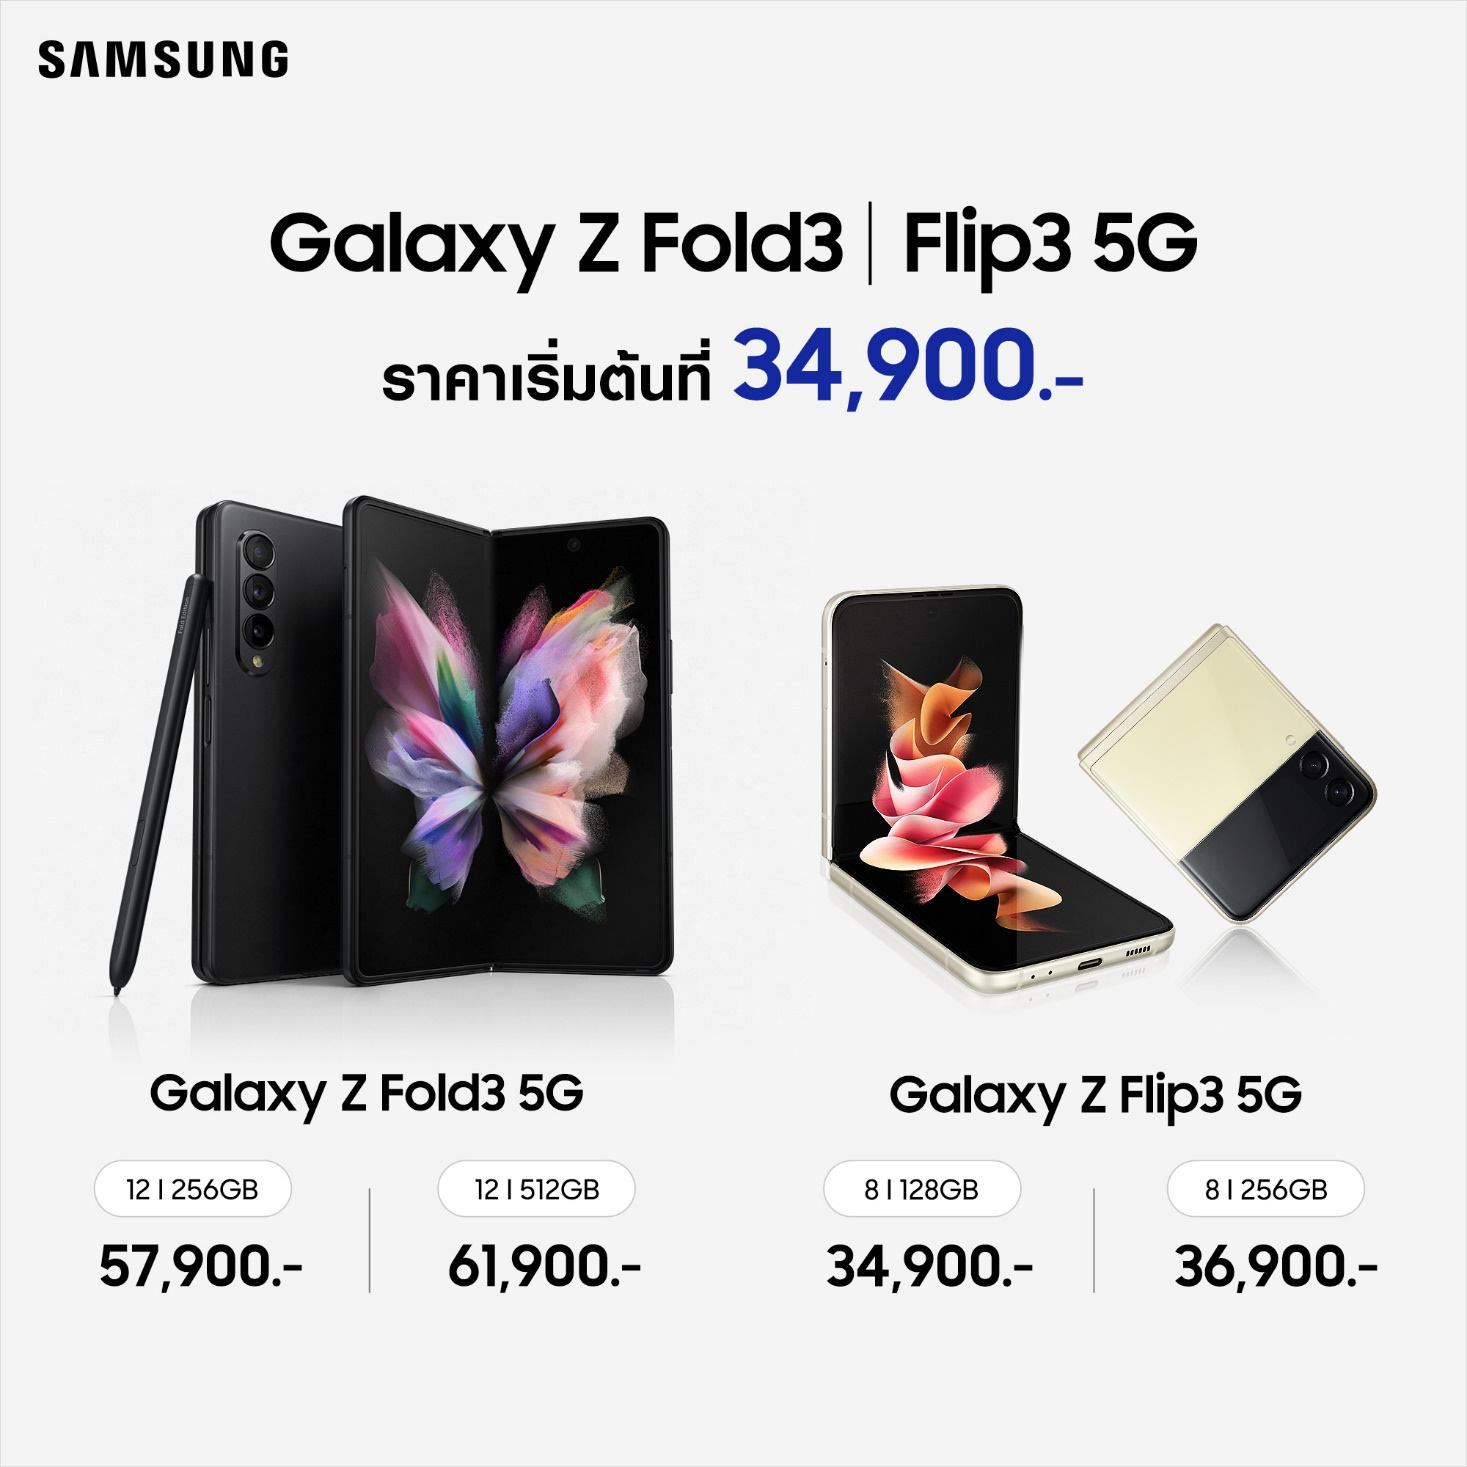 unnamed 1 | 5G | พรีวิว หลังลองใช้ Samsung Galaxy Z Fold3 5G สมาร์ทโฟนแปลงกายแท็บเล็ต มีดีมีเสียตรงไหน?